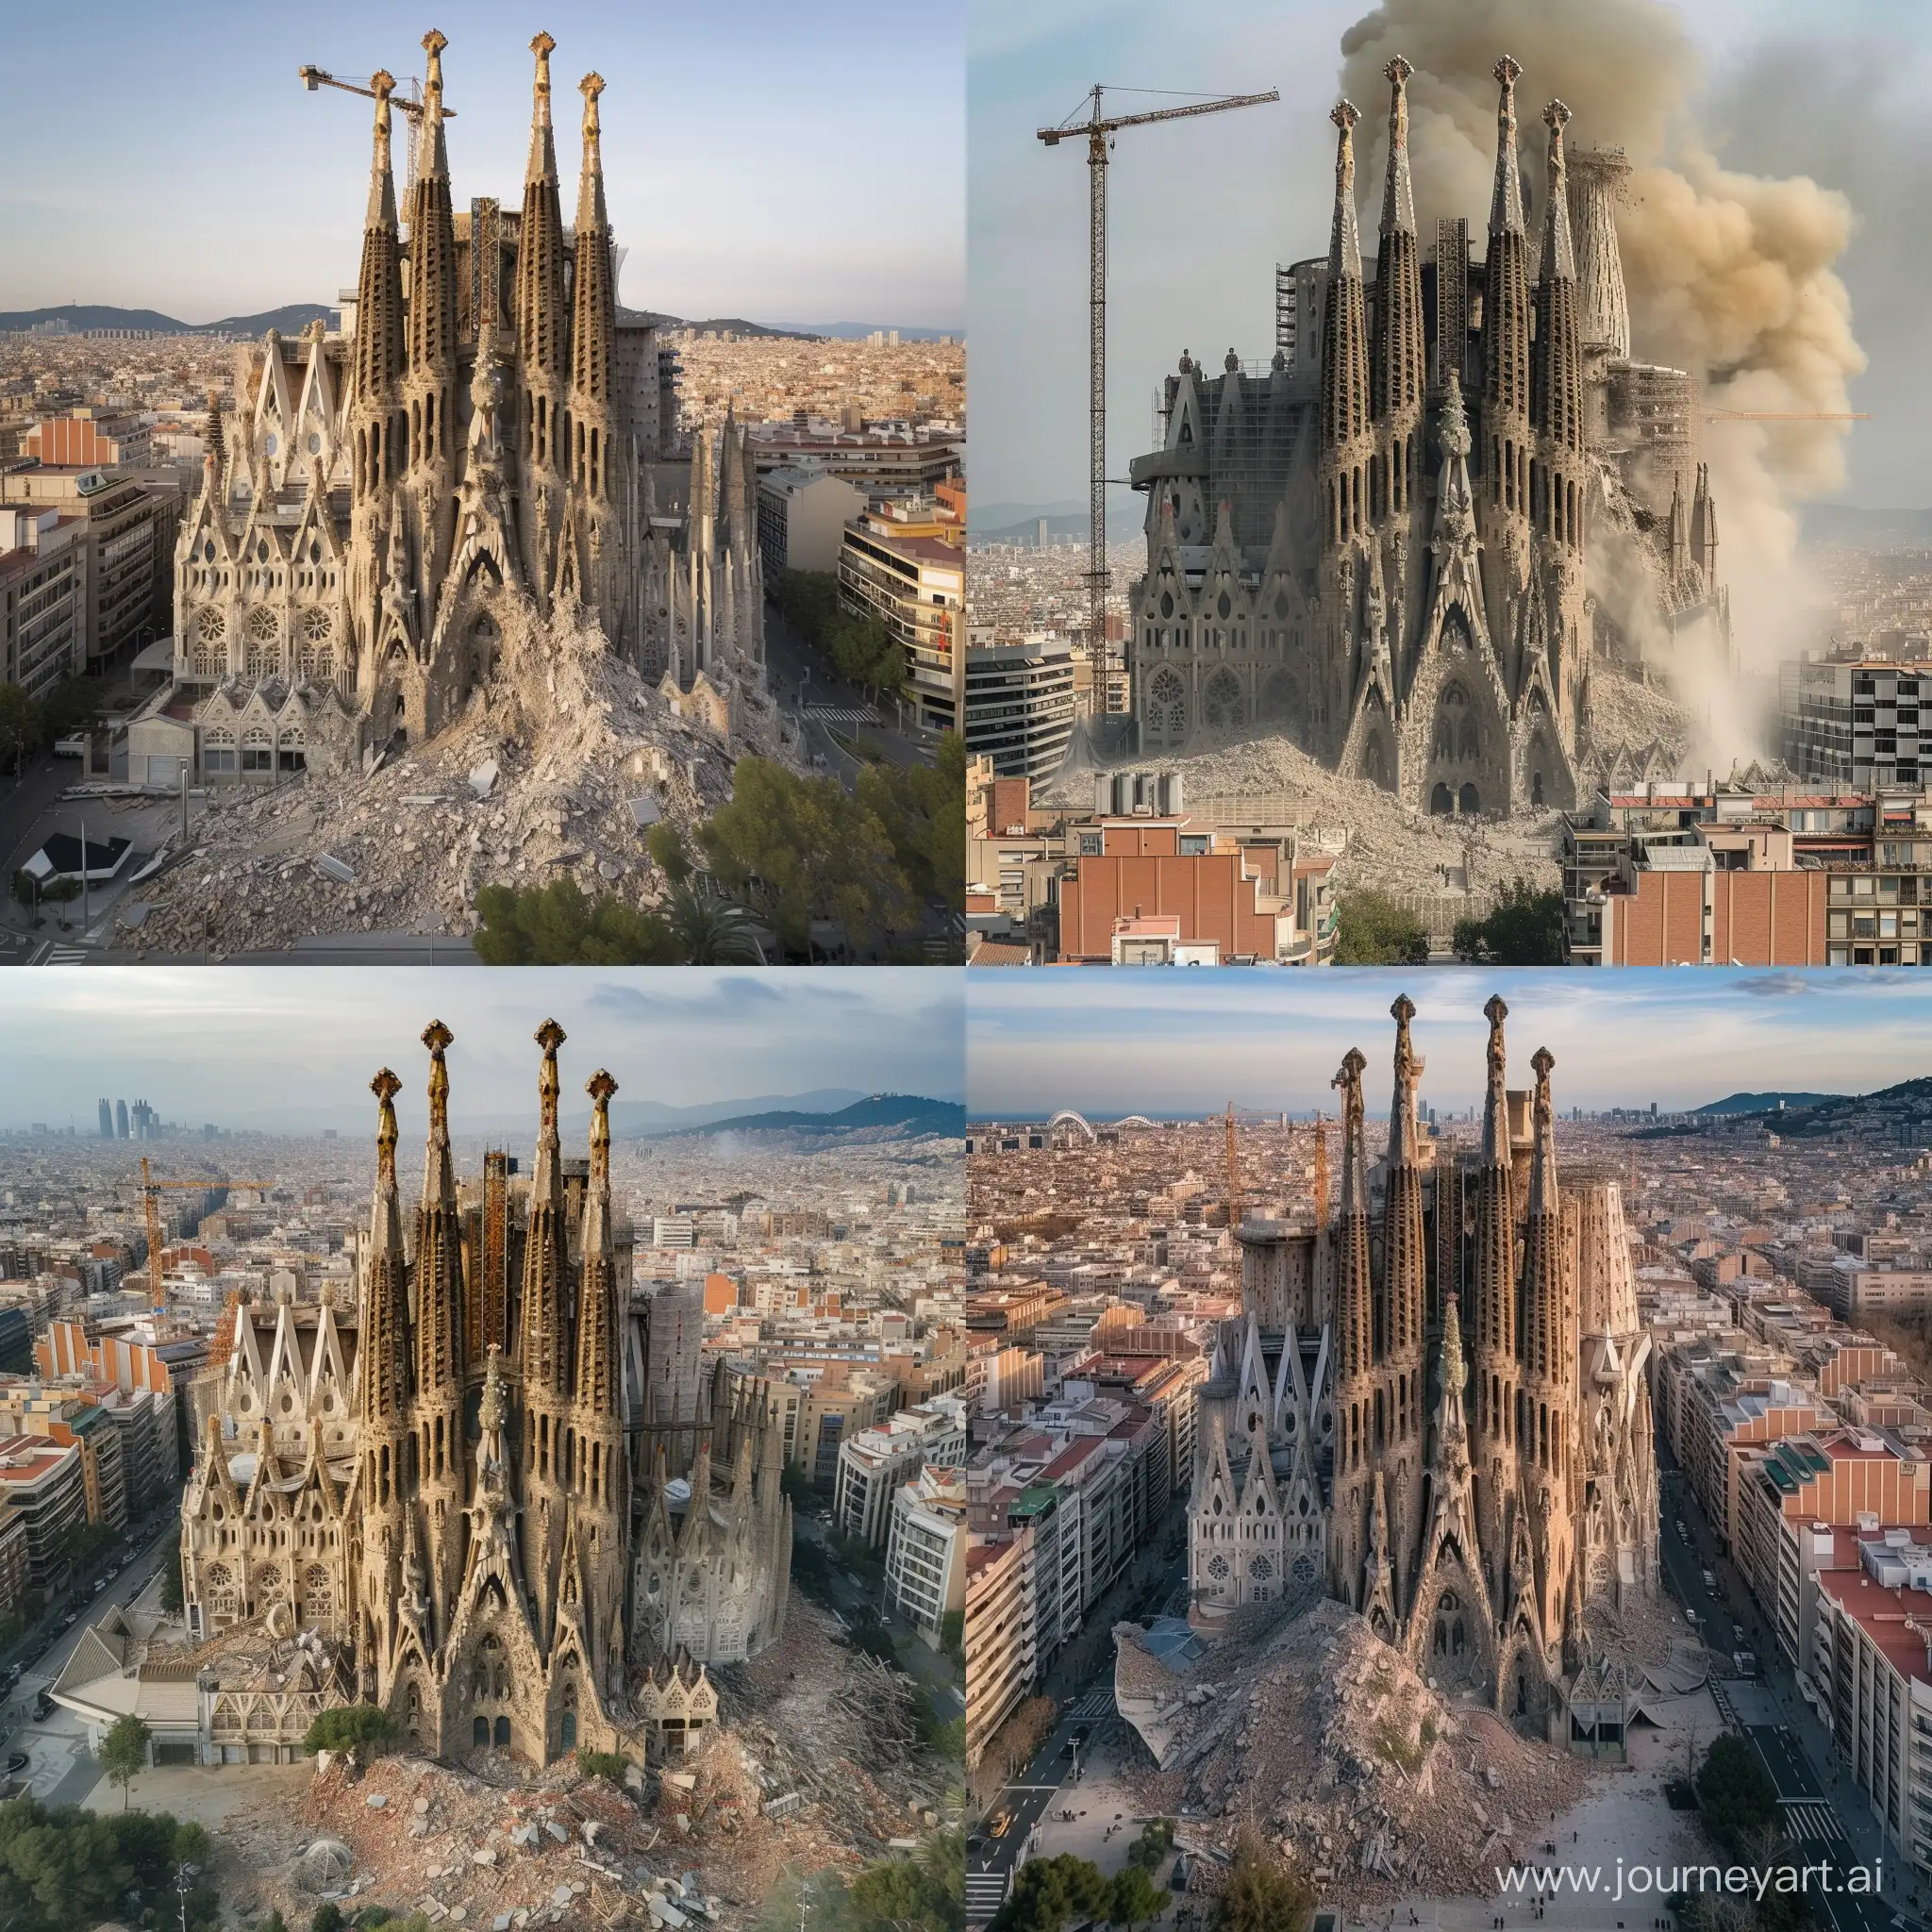 Sagrada-Famlia-Collapse-Tragic-Event-Unfolding-in-Barcelona